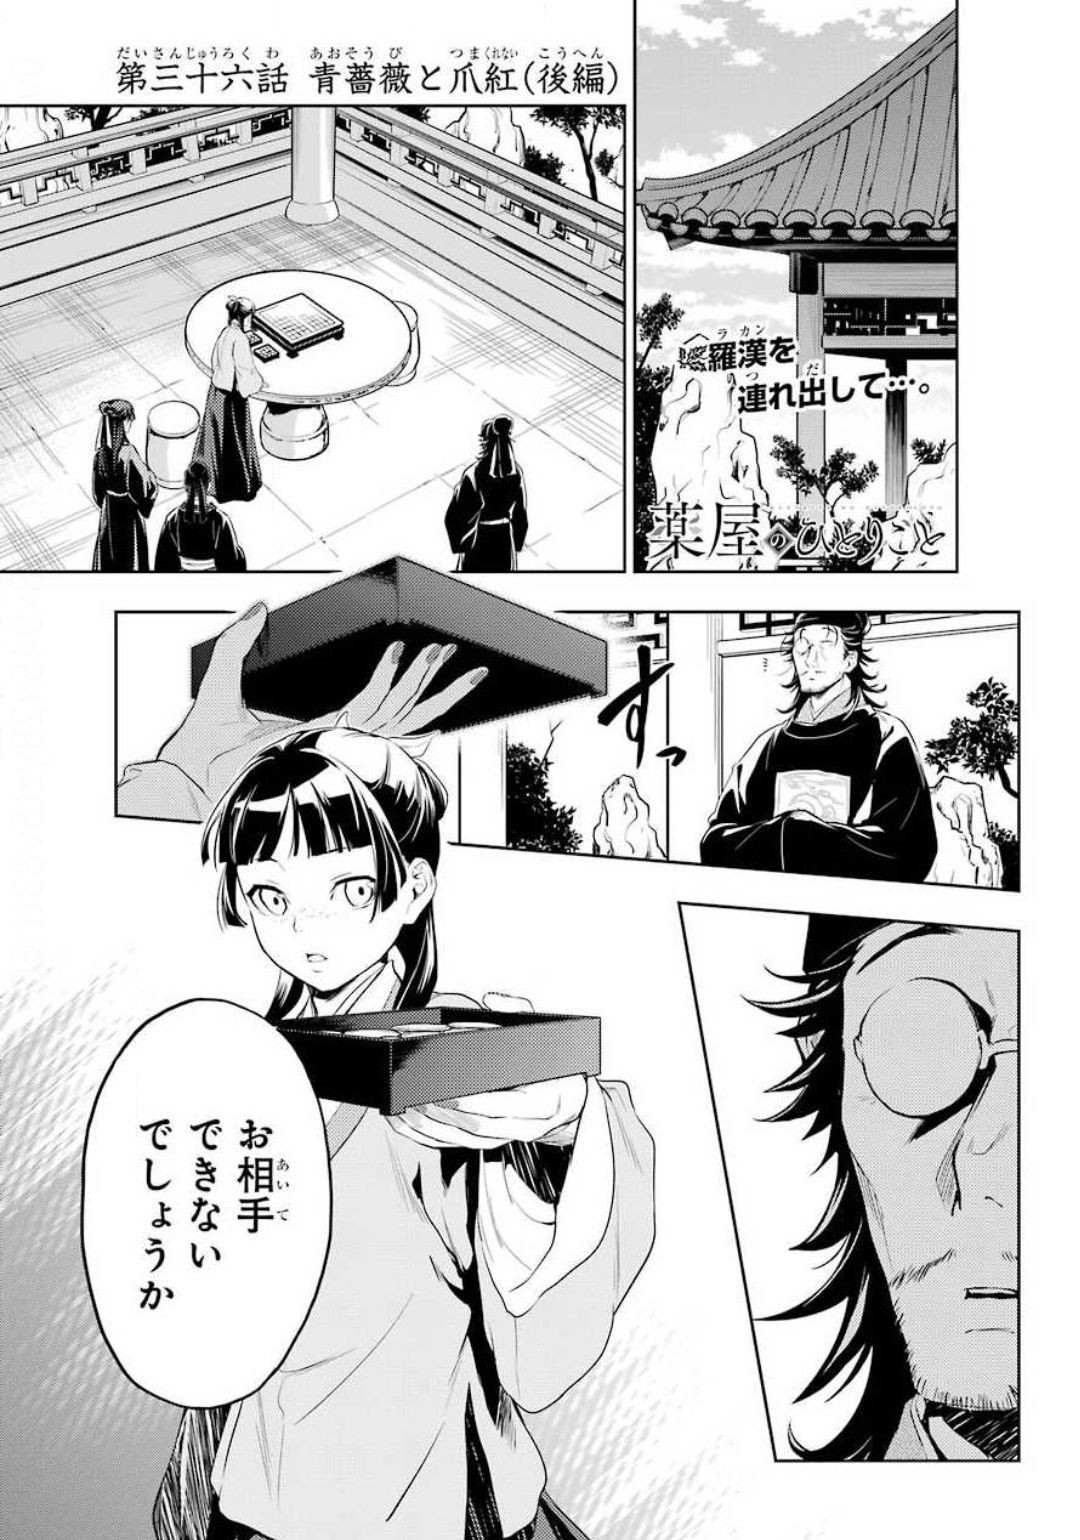 Kusuriya no Hitorigoto - Chapter 36-3 - Page 2